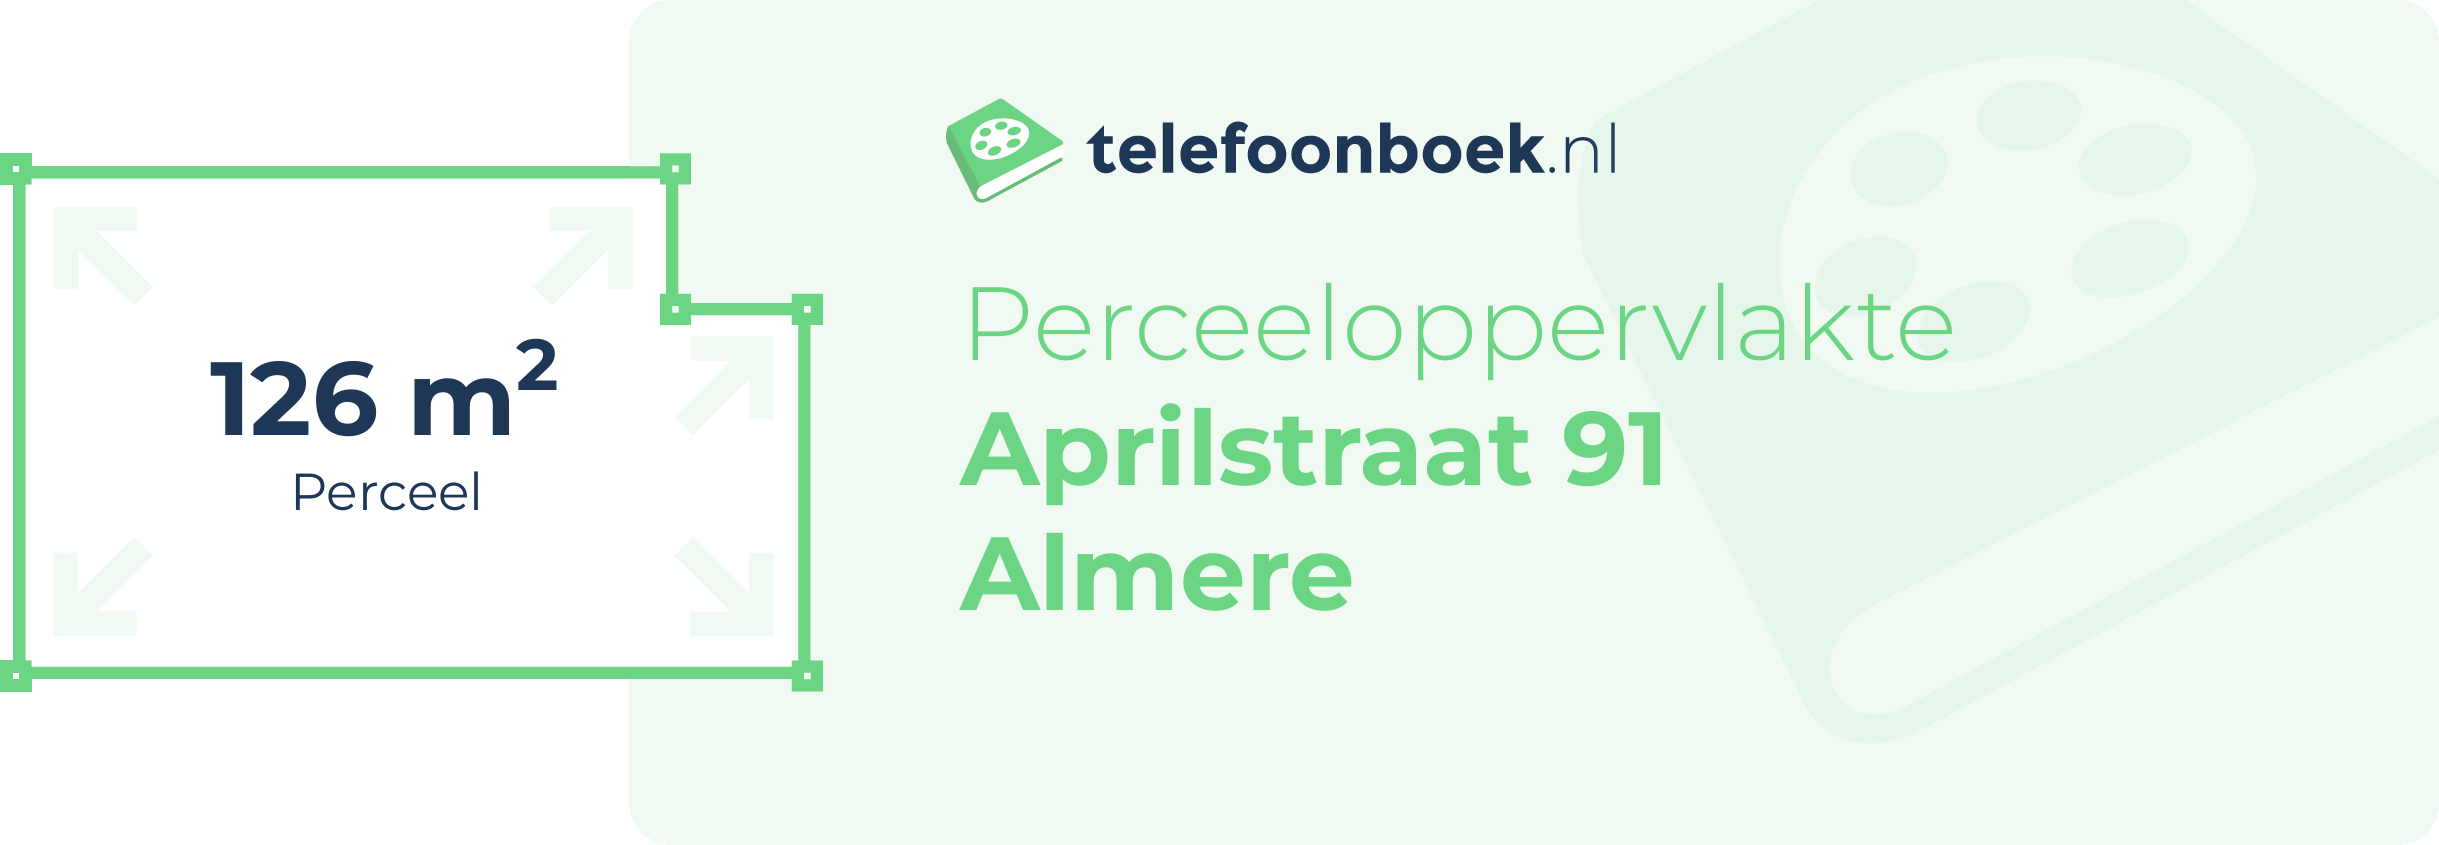 Perceeloppervlakte Aprilstraat 91 Almere